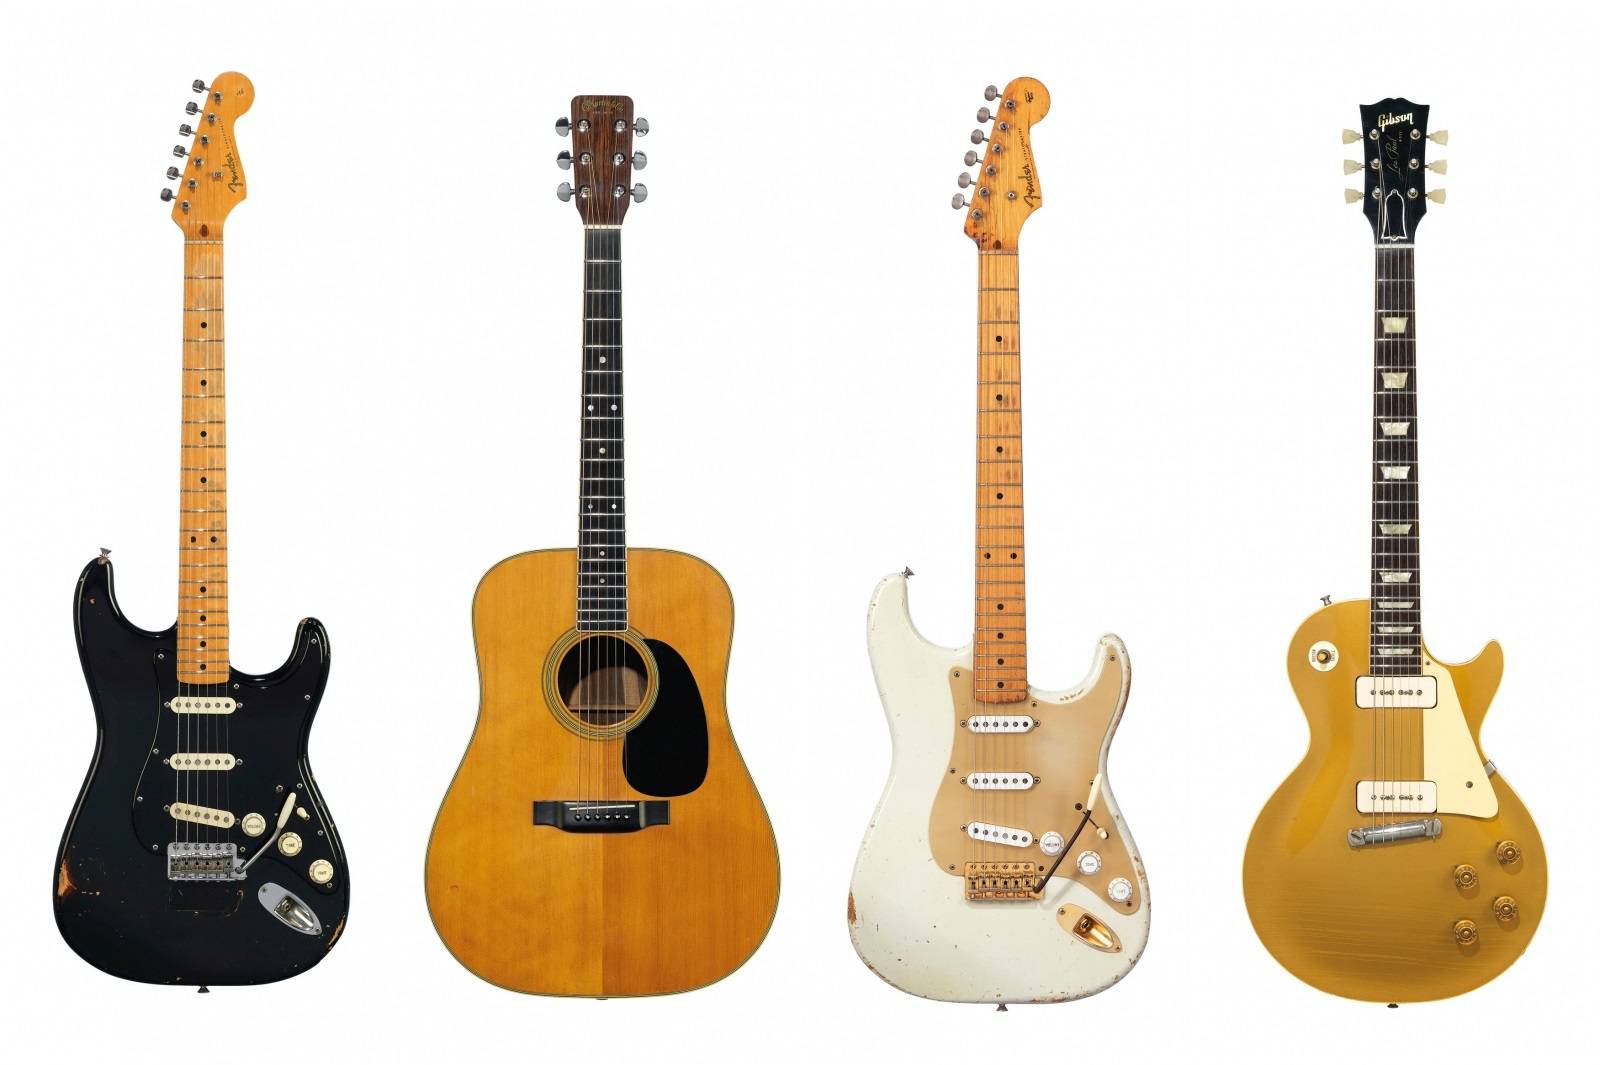 Christie's auction images of David Gilmourâs guitars in combination photo